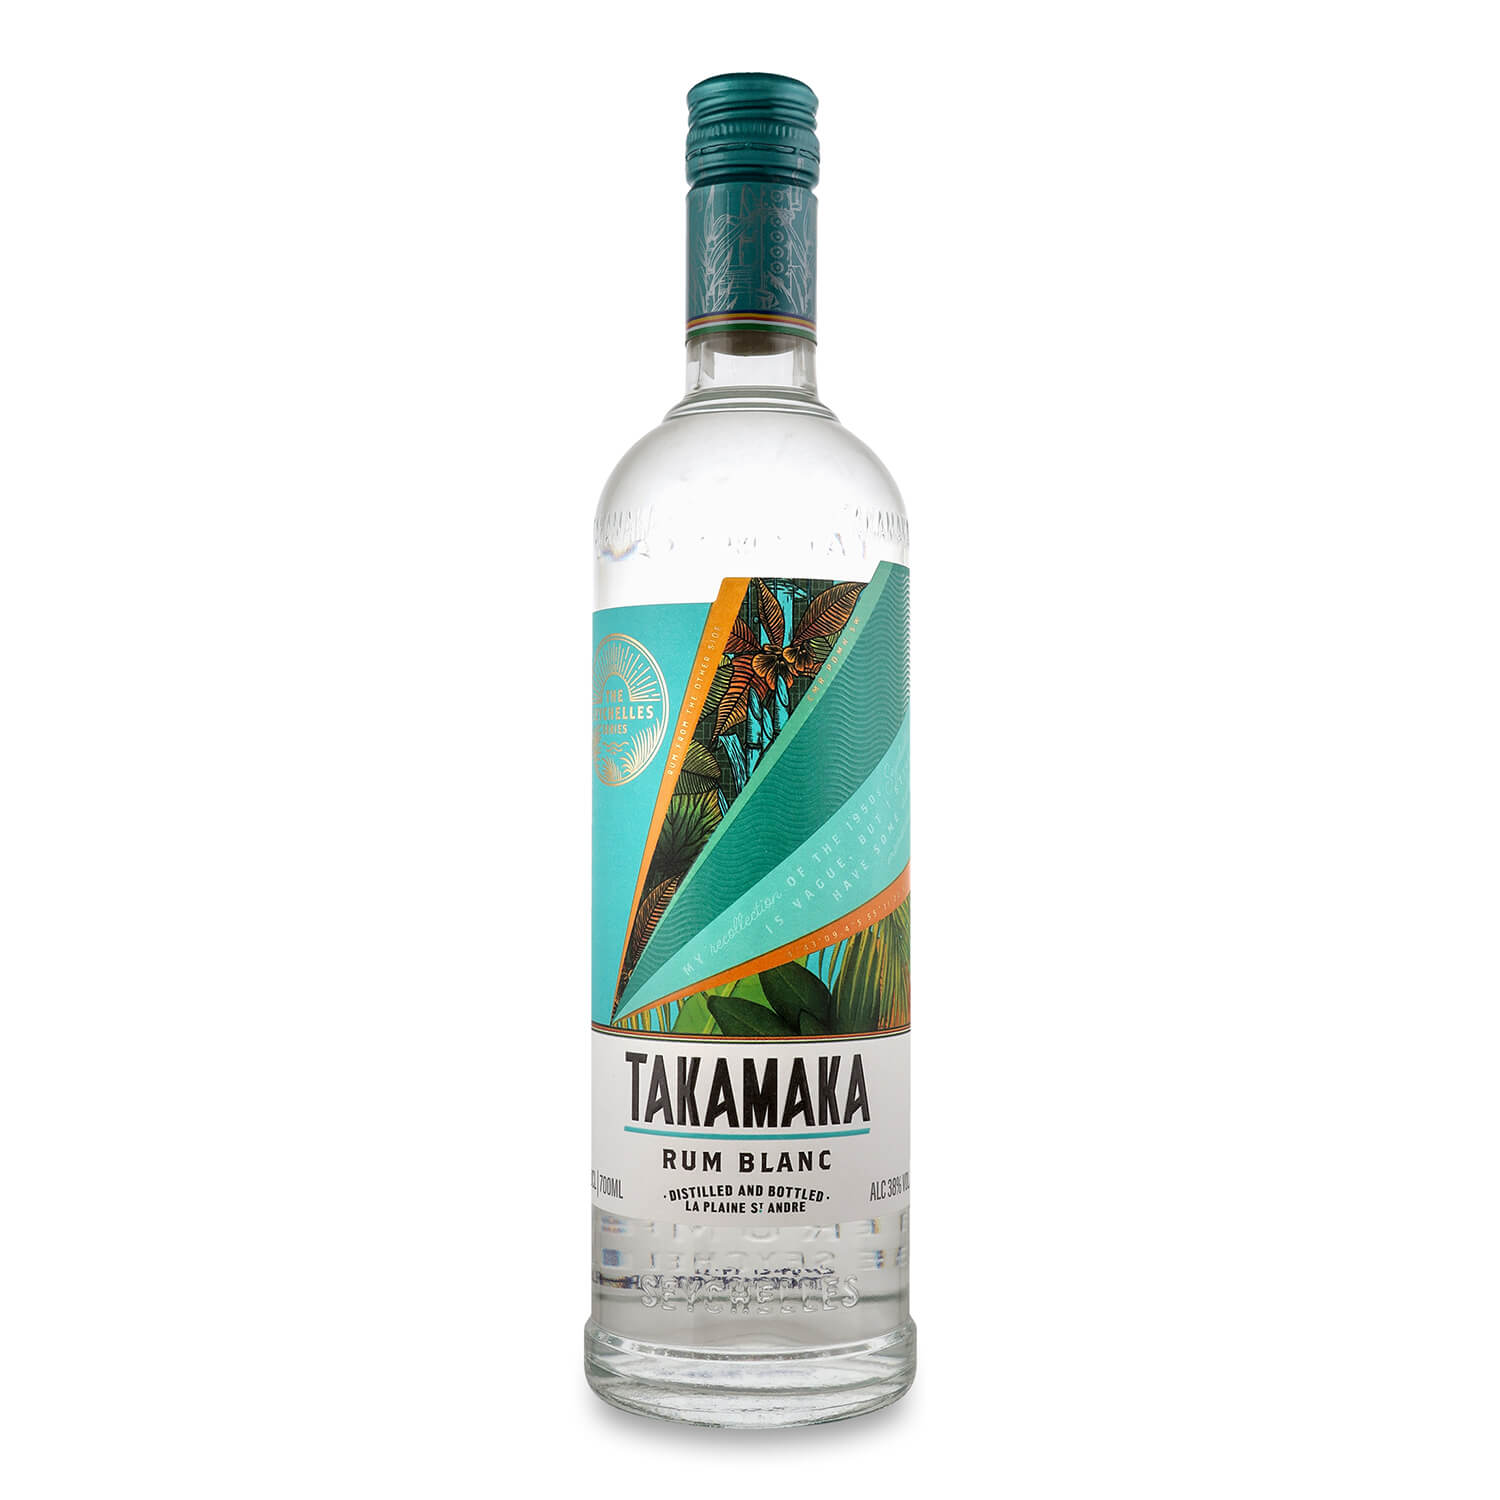 Ромовый напиток Takamaka Rum Blanc, 38%, 0,7 л (871948) - фото 1